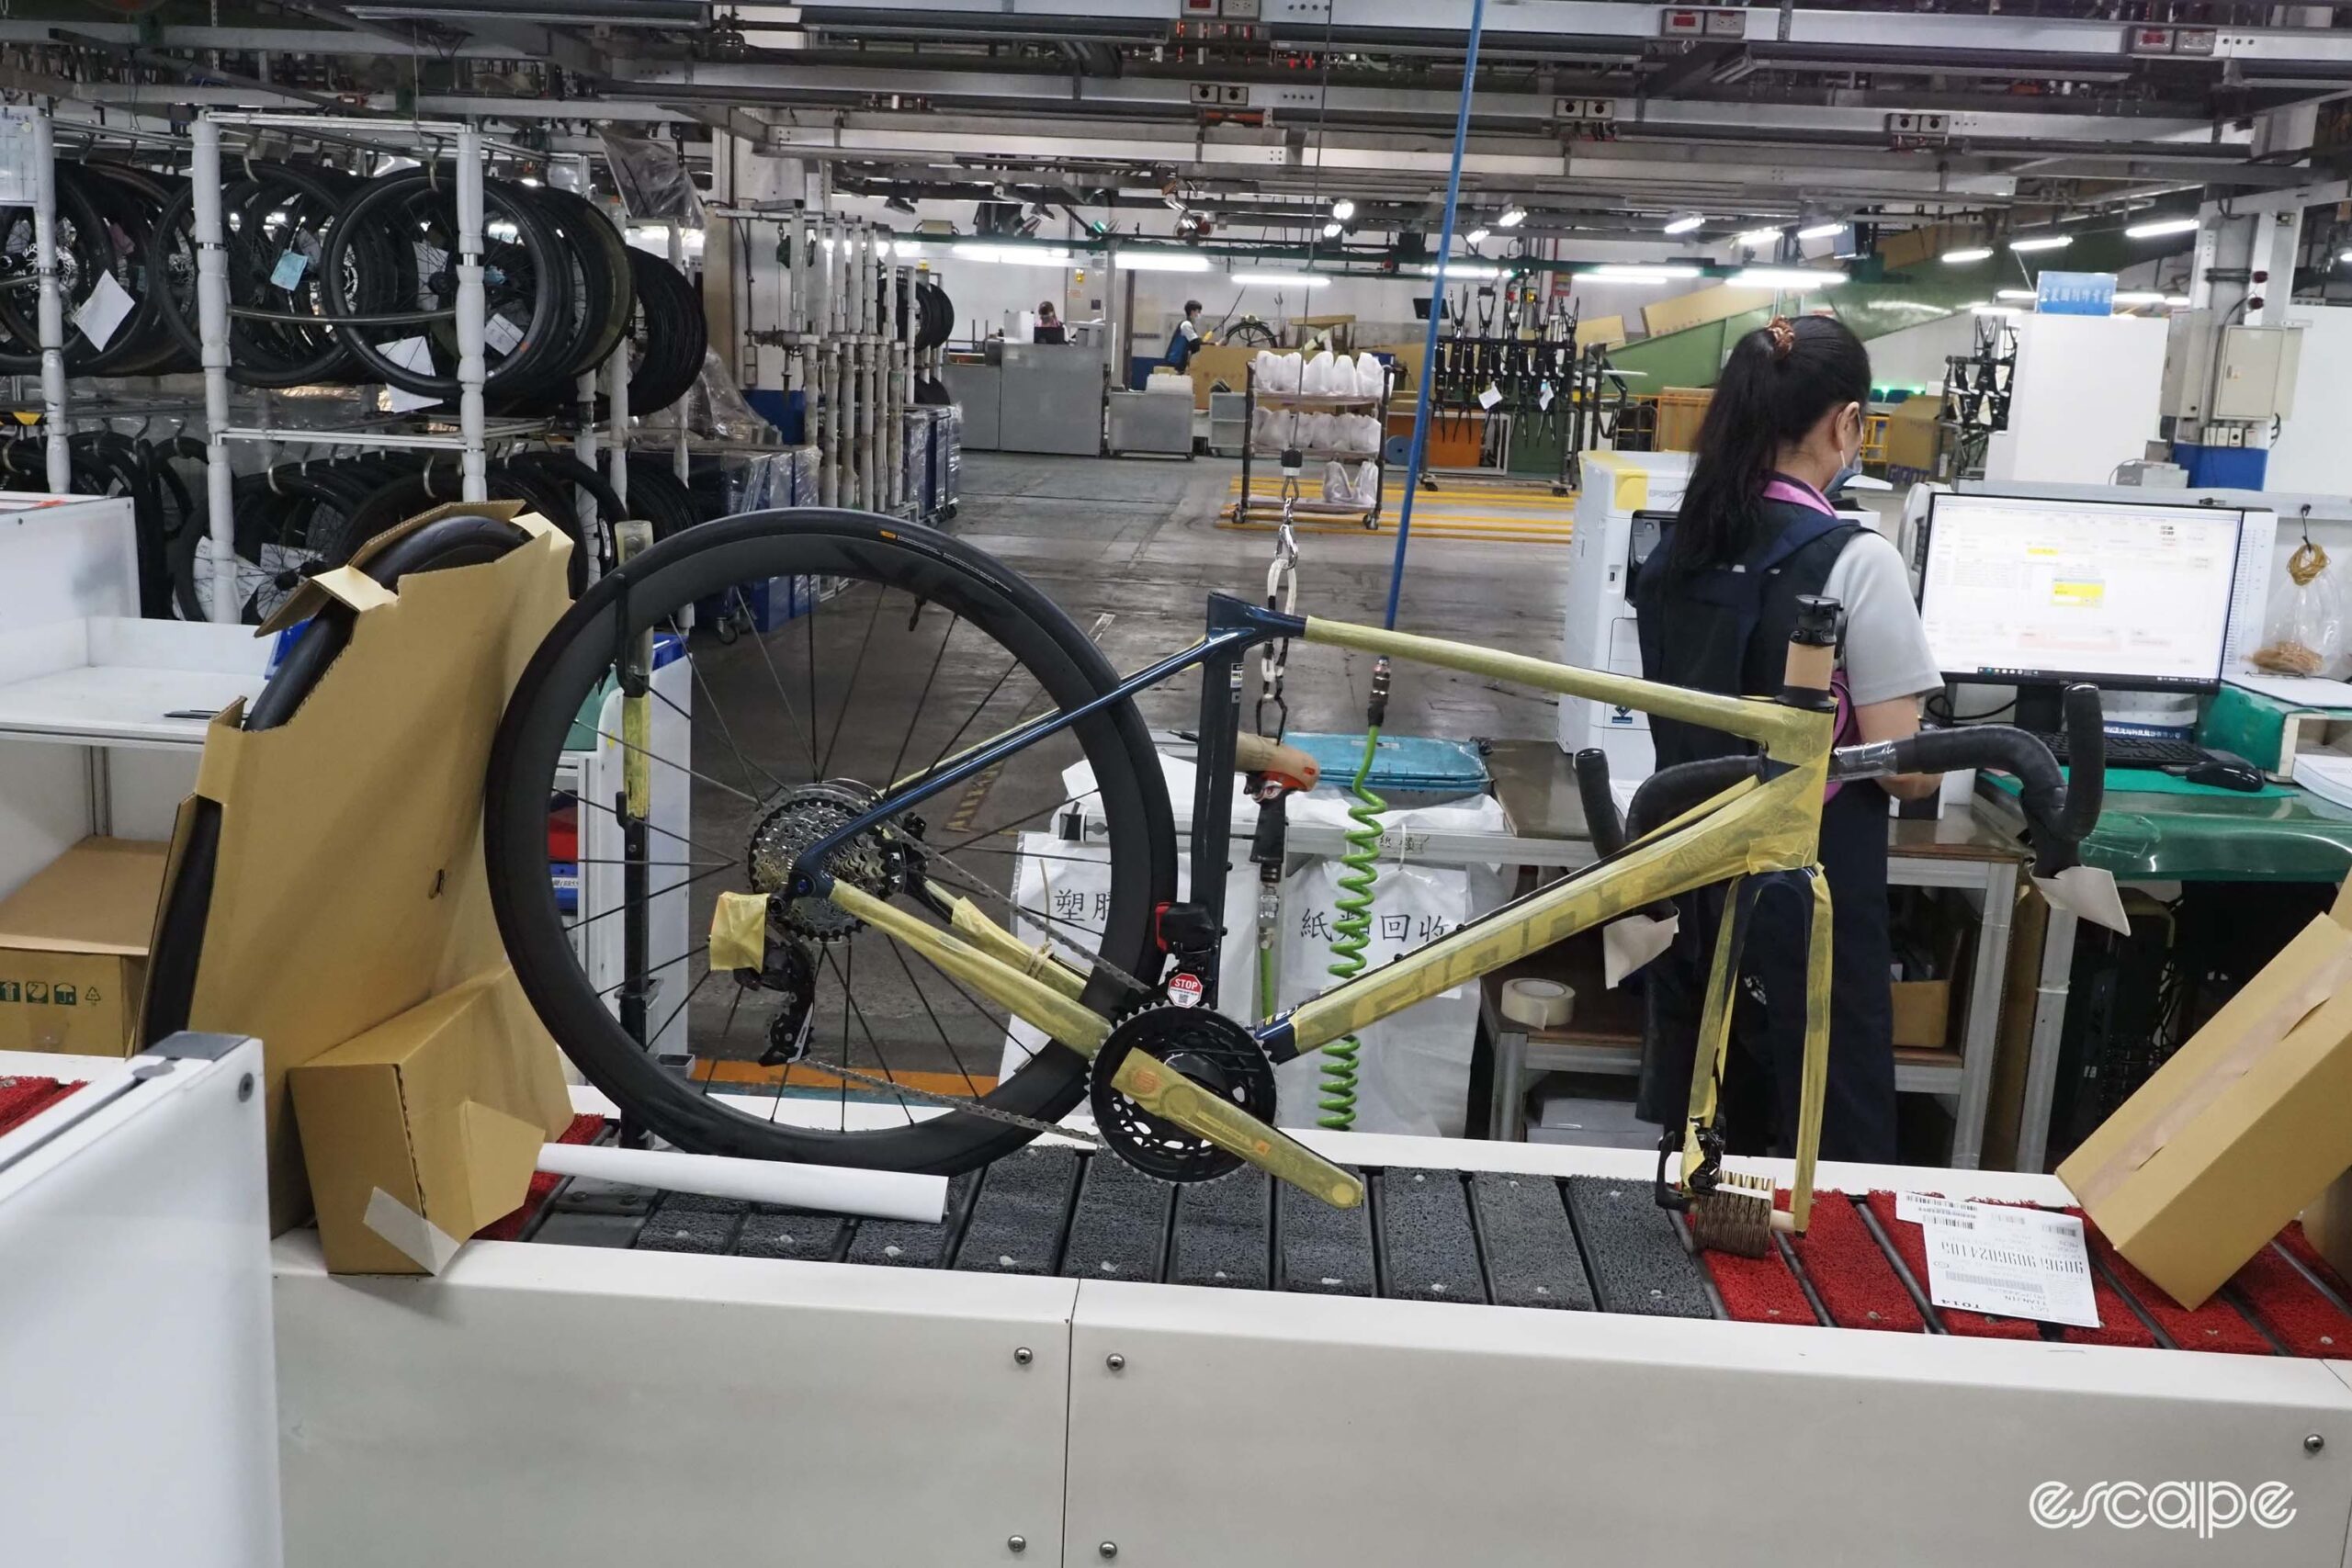 Giant carbon factory tour built bike on conveyor